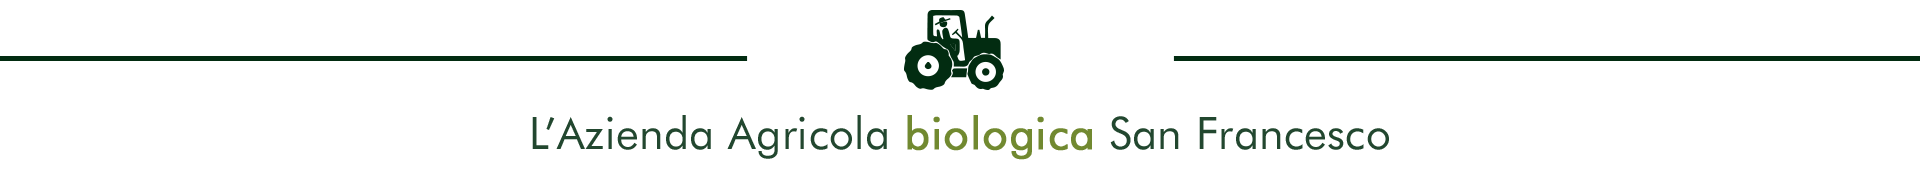 – Vendita Prodotti Alimentari Biologici – Azienda san Francesco Bio Maremma Toscana